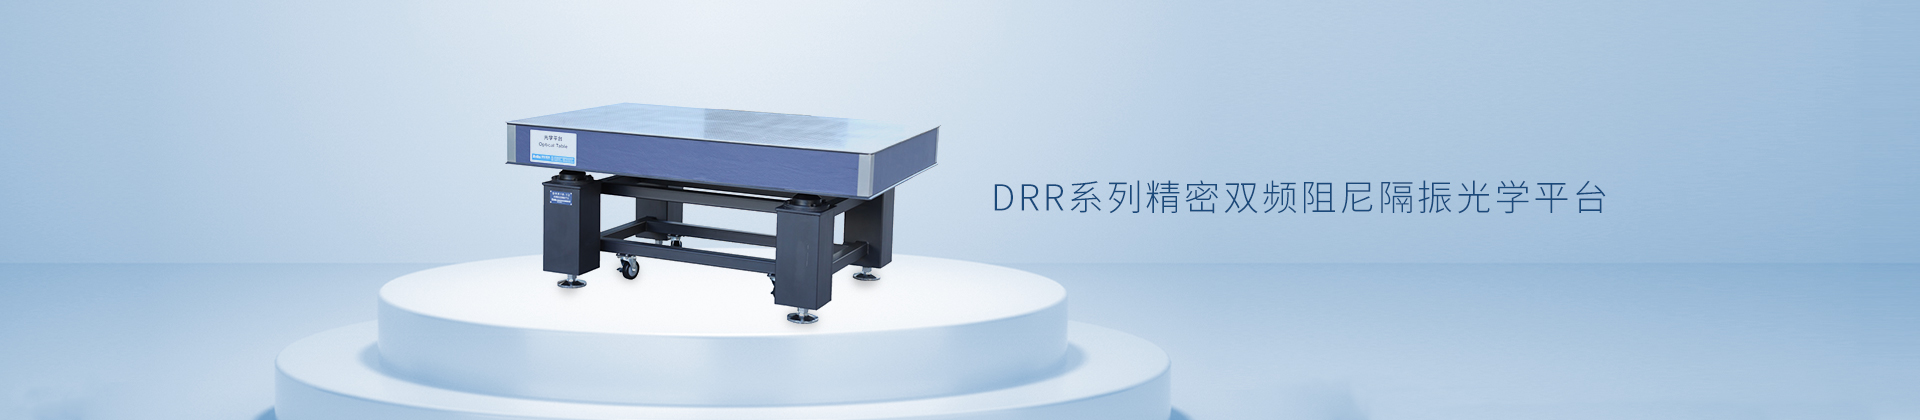 DRR系列精密双频阻尼隔振光学平台